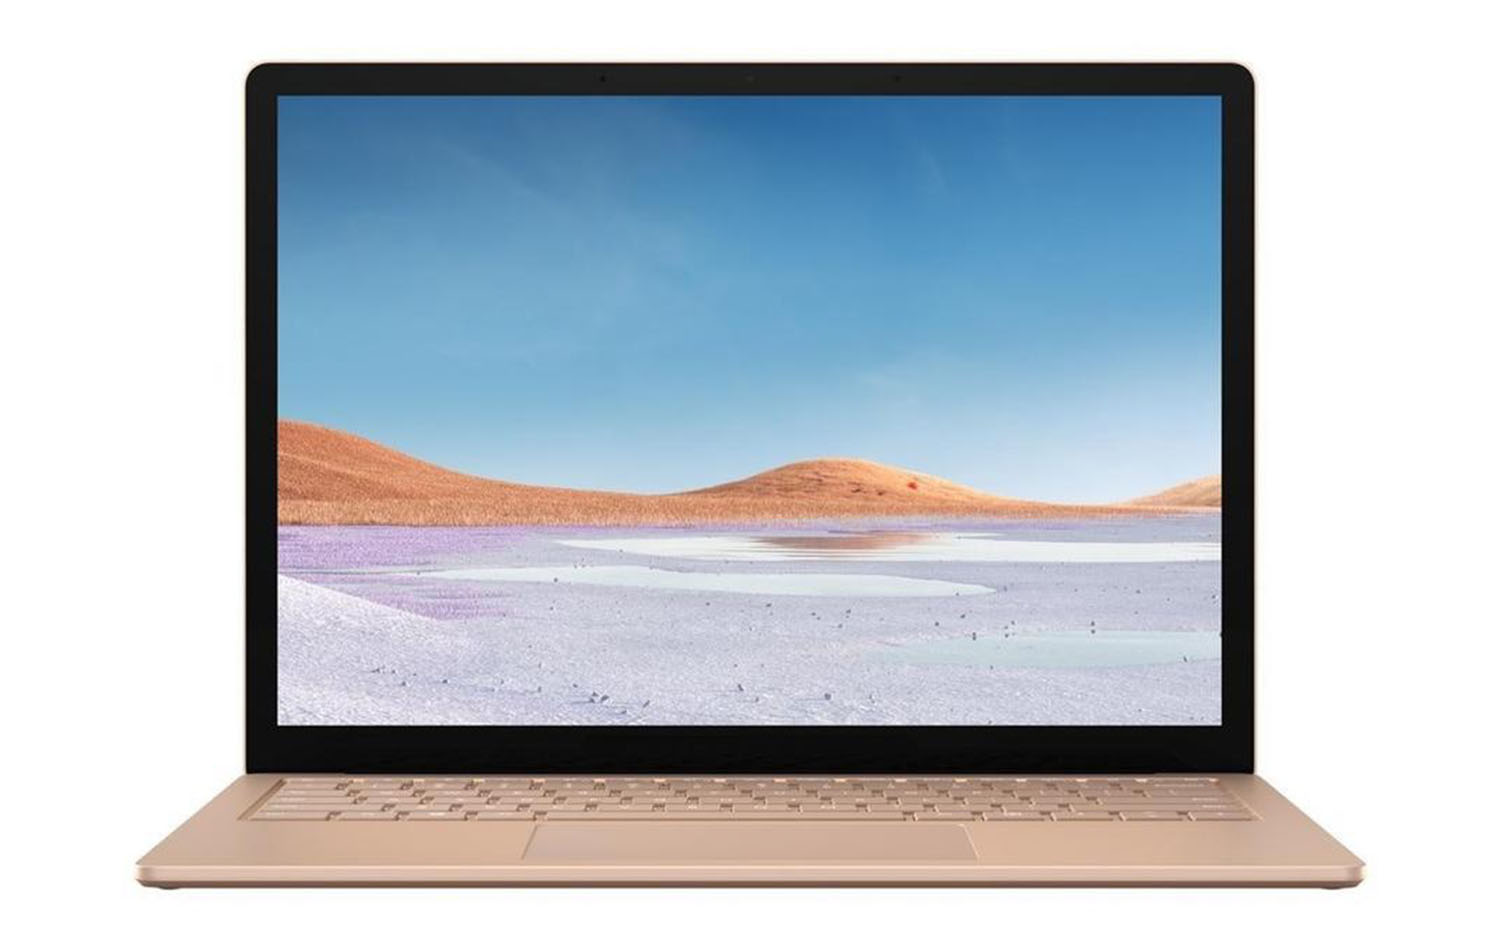 Microsoft Surface Laptop 3 Intel Core i7 10th Gen 16GB RAM 256GB SSD Touchscreen Windows 10 Pro